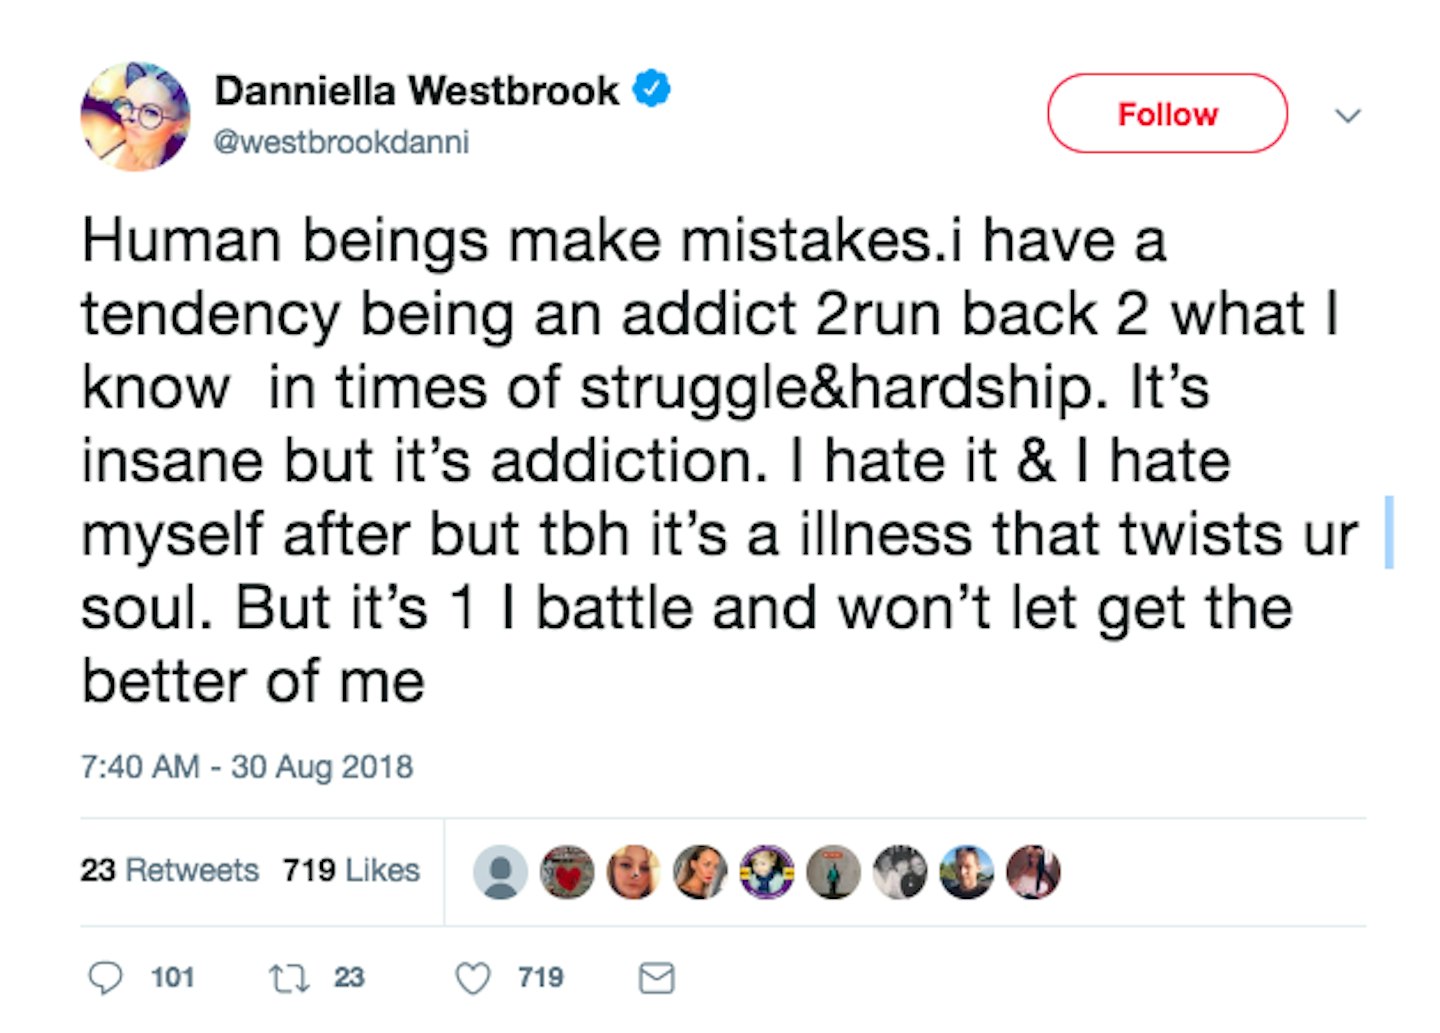 Danniella Westbrook